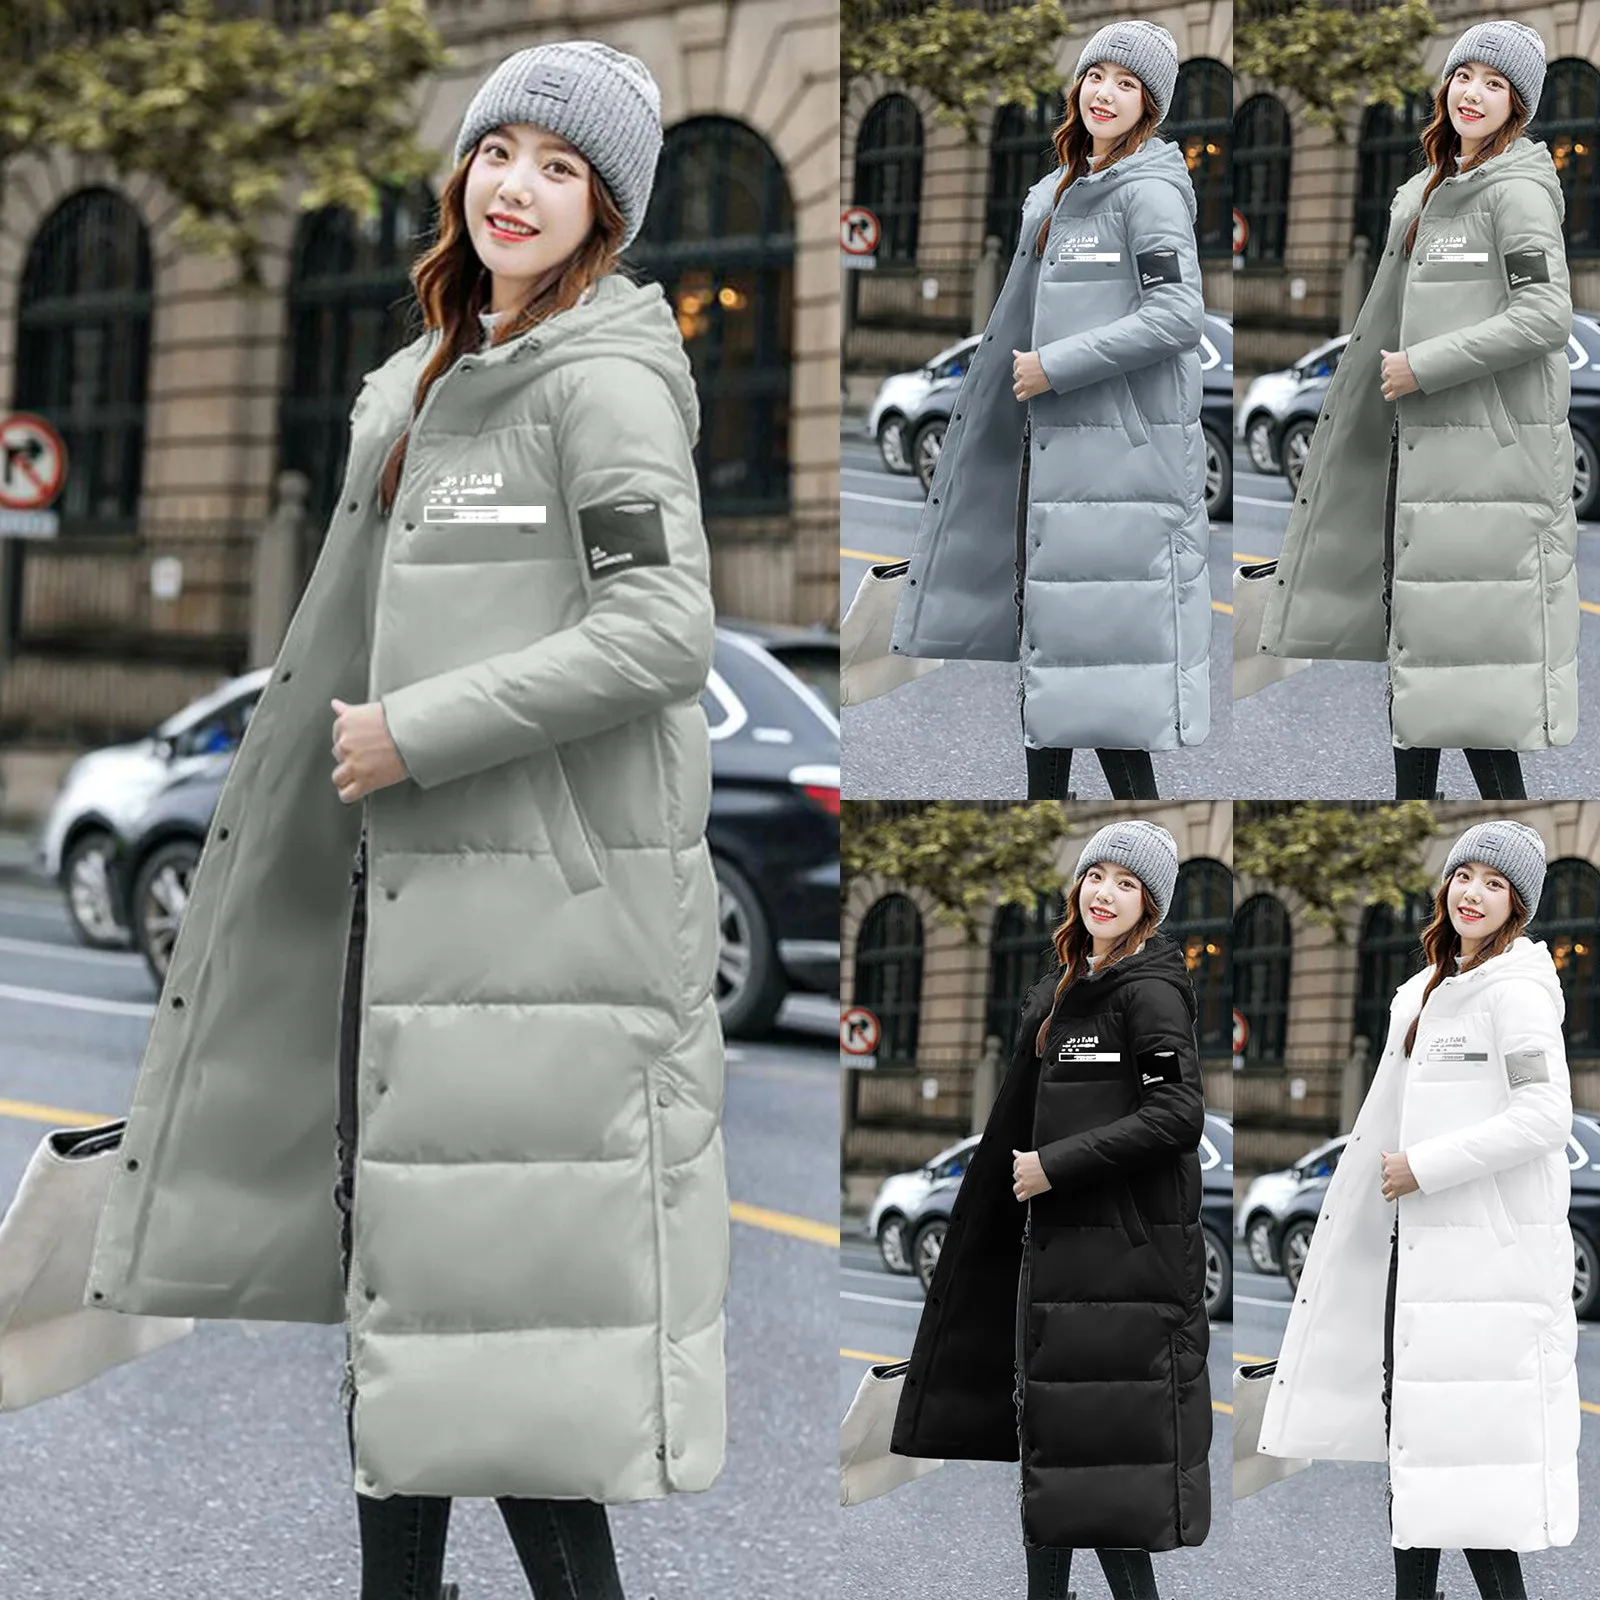 2021 New Women Winter Jacket Long Warm Parkas Female Thicken Coat Cotton Padded Parka Jacket Hooded Outwear Plus Size 2XL